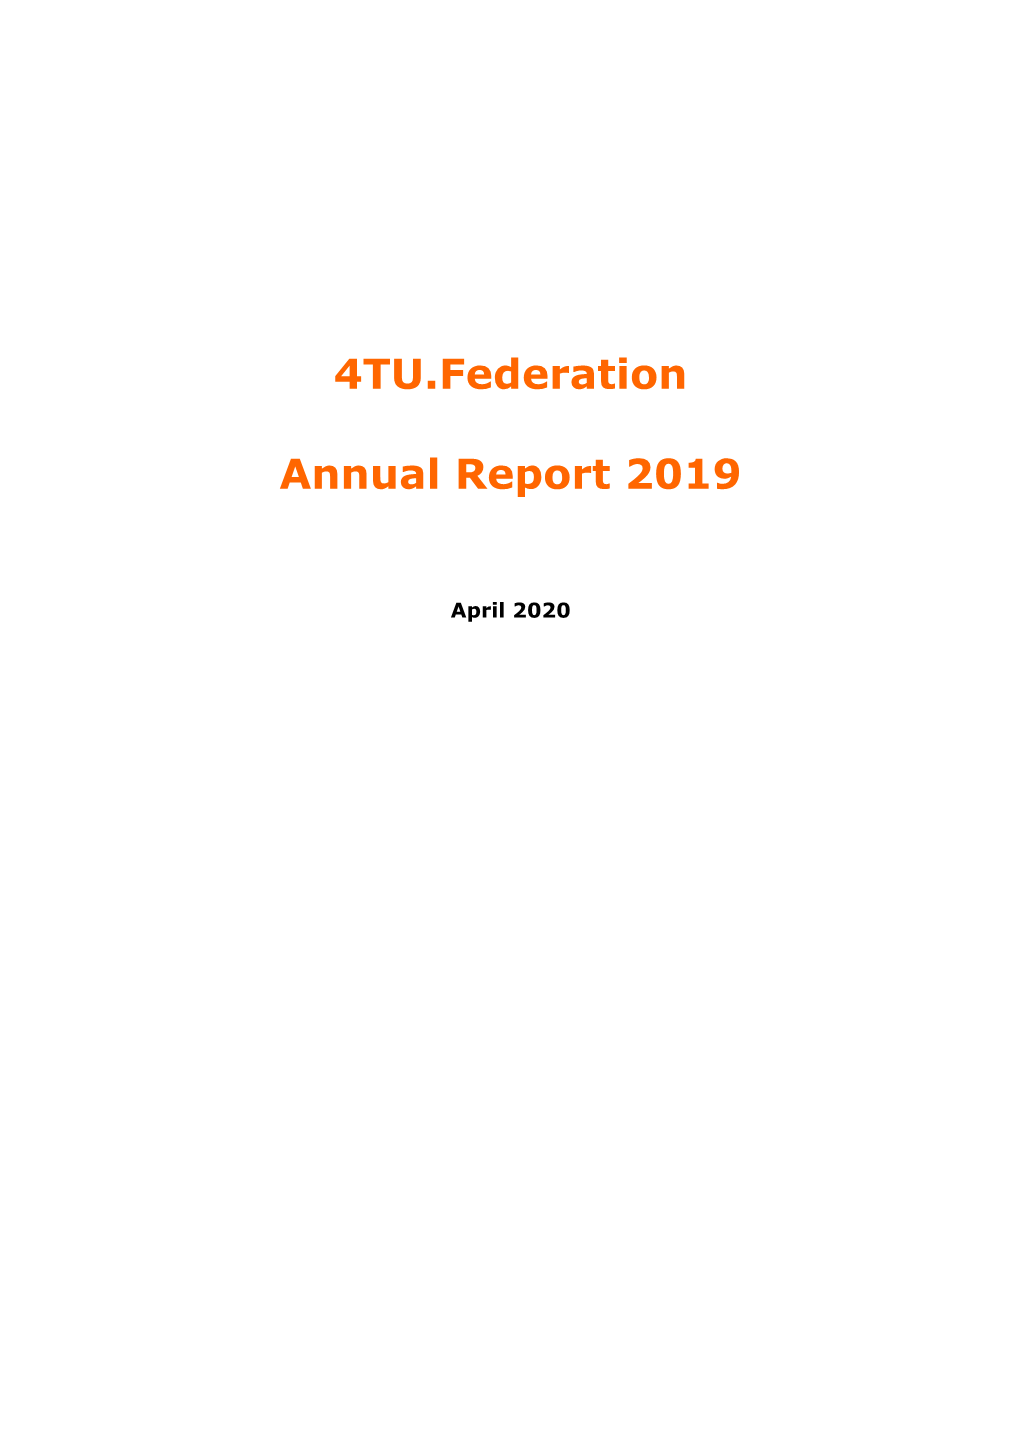 4TU.Federation Annual Report 2019